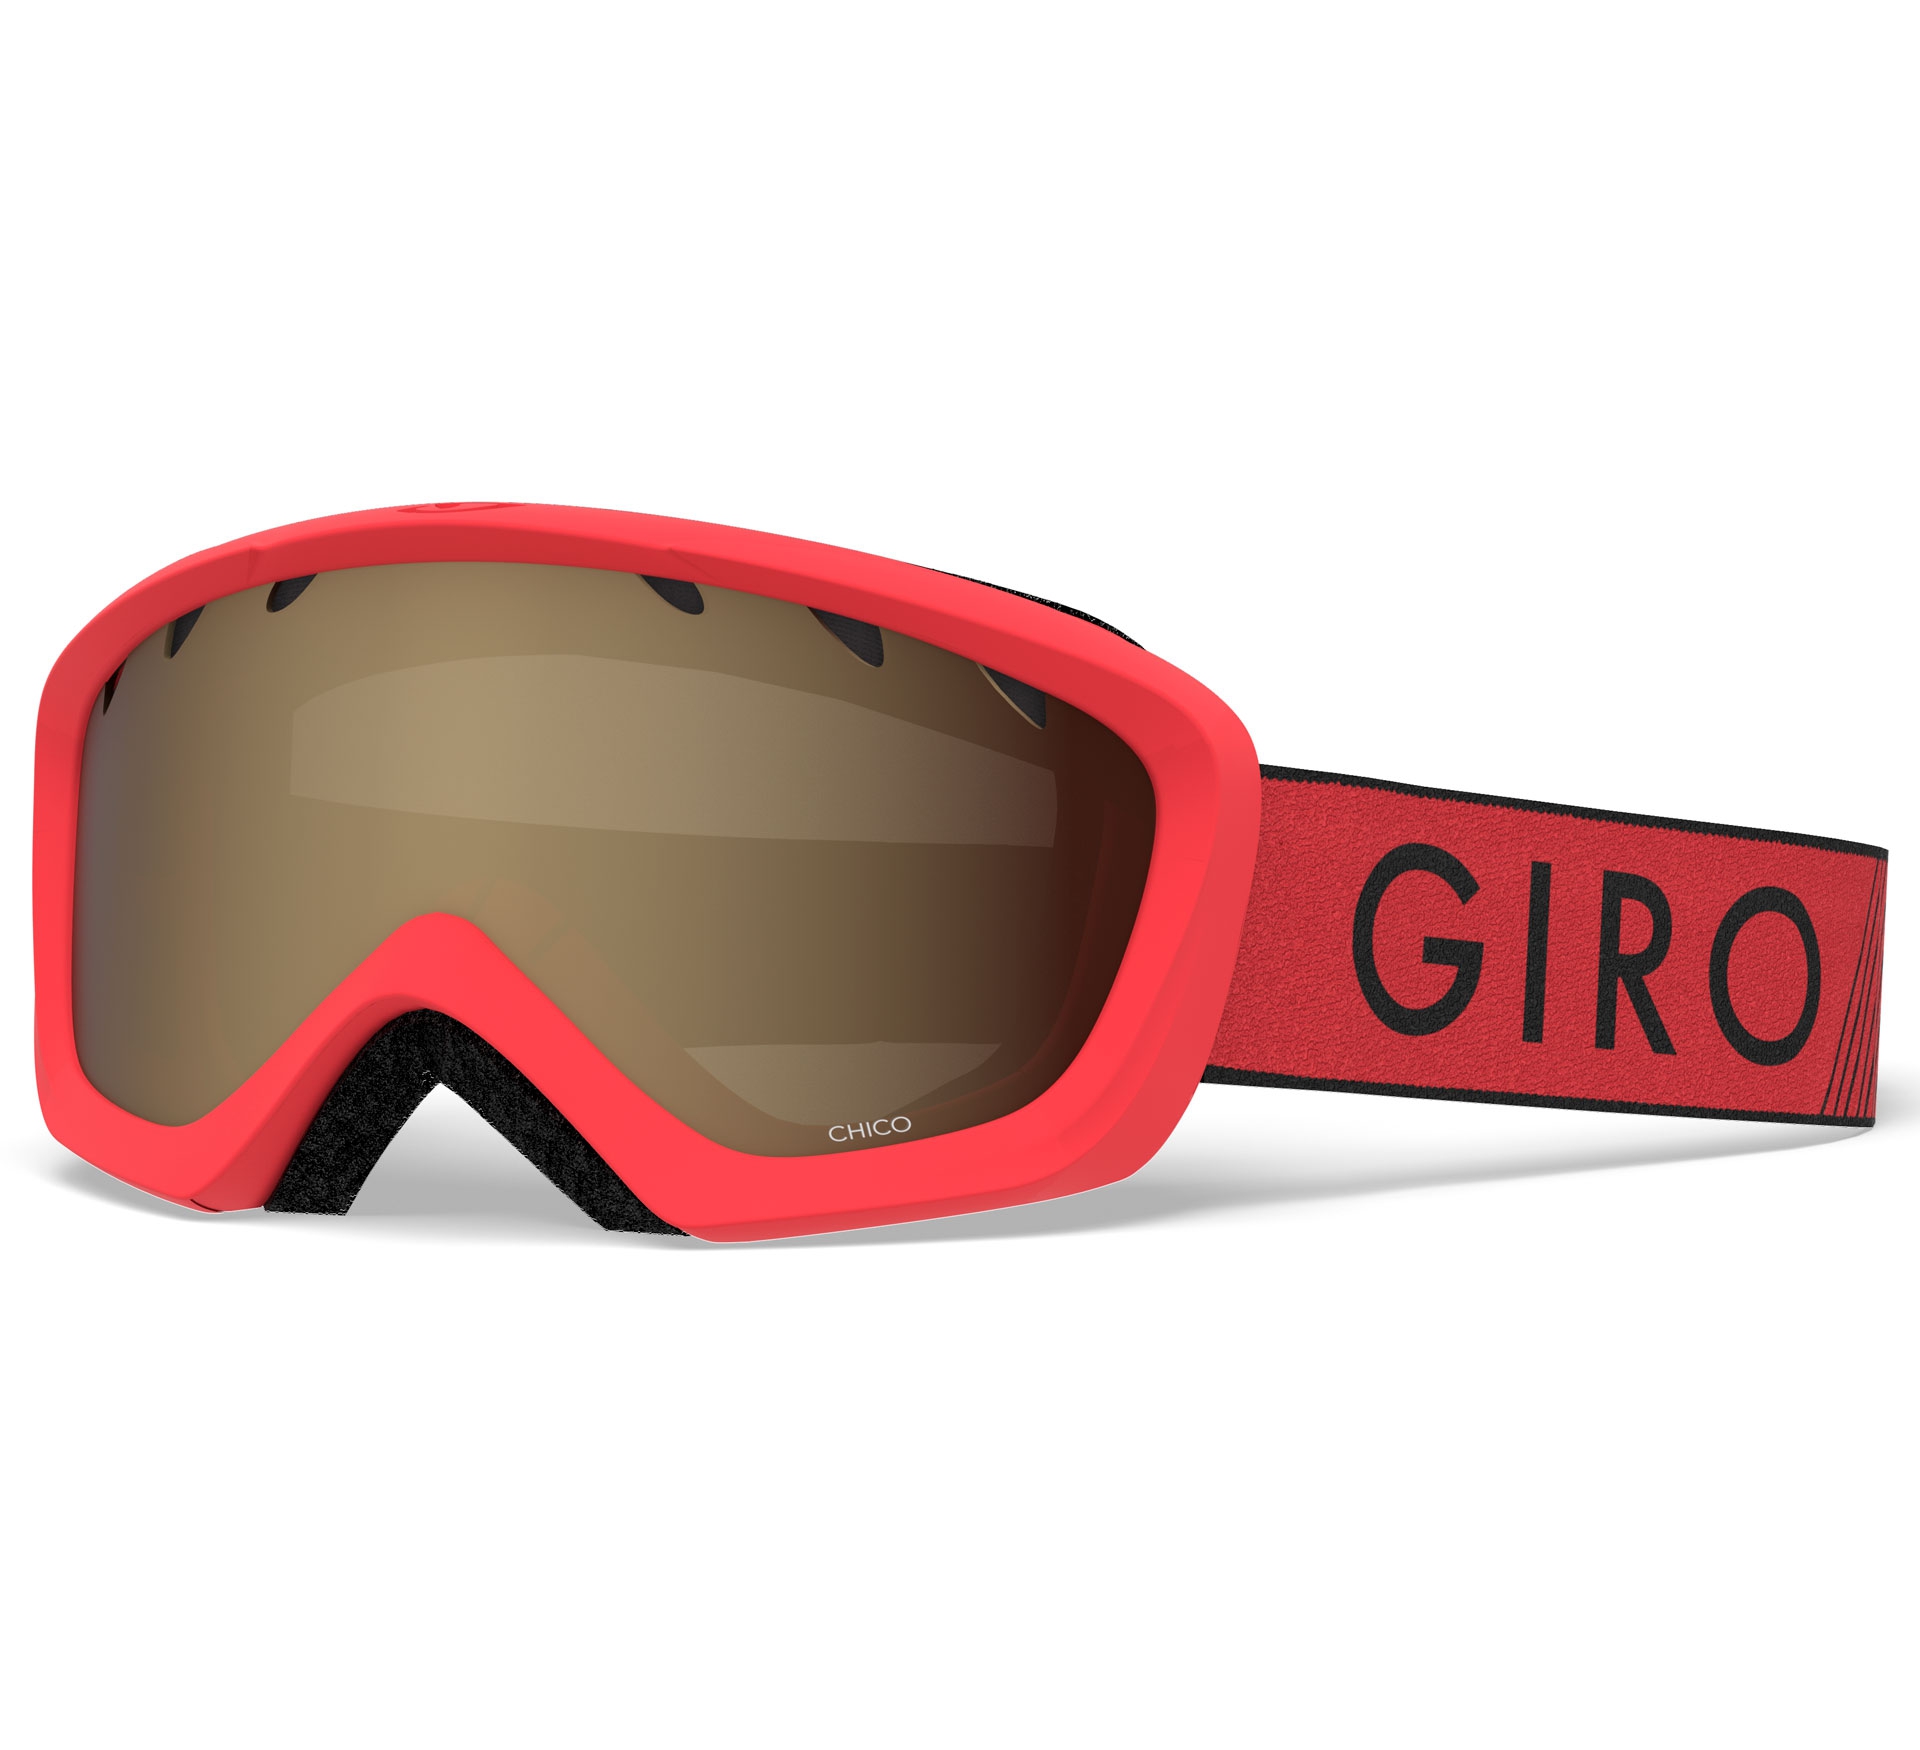 Masque de ski Giro Chico